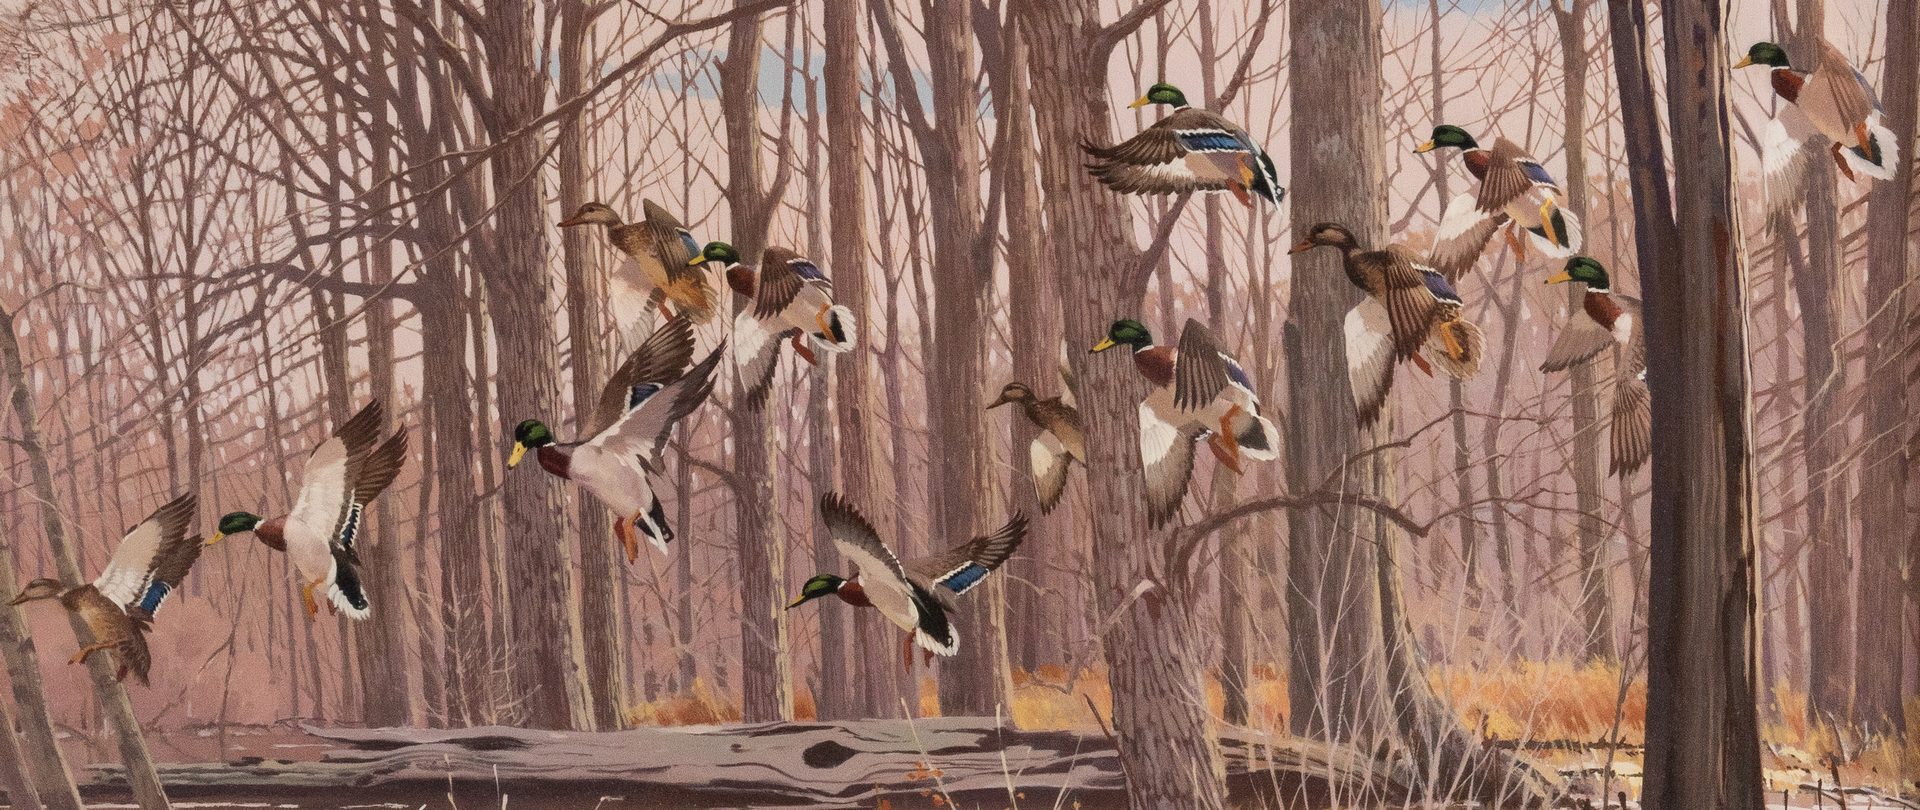 Mallard Duck Art Painting Print 2014 Arkansas Ducks Unlimited Reydell Hole  